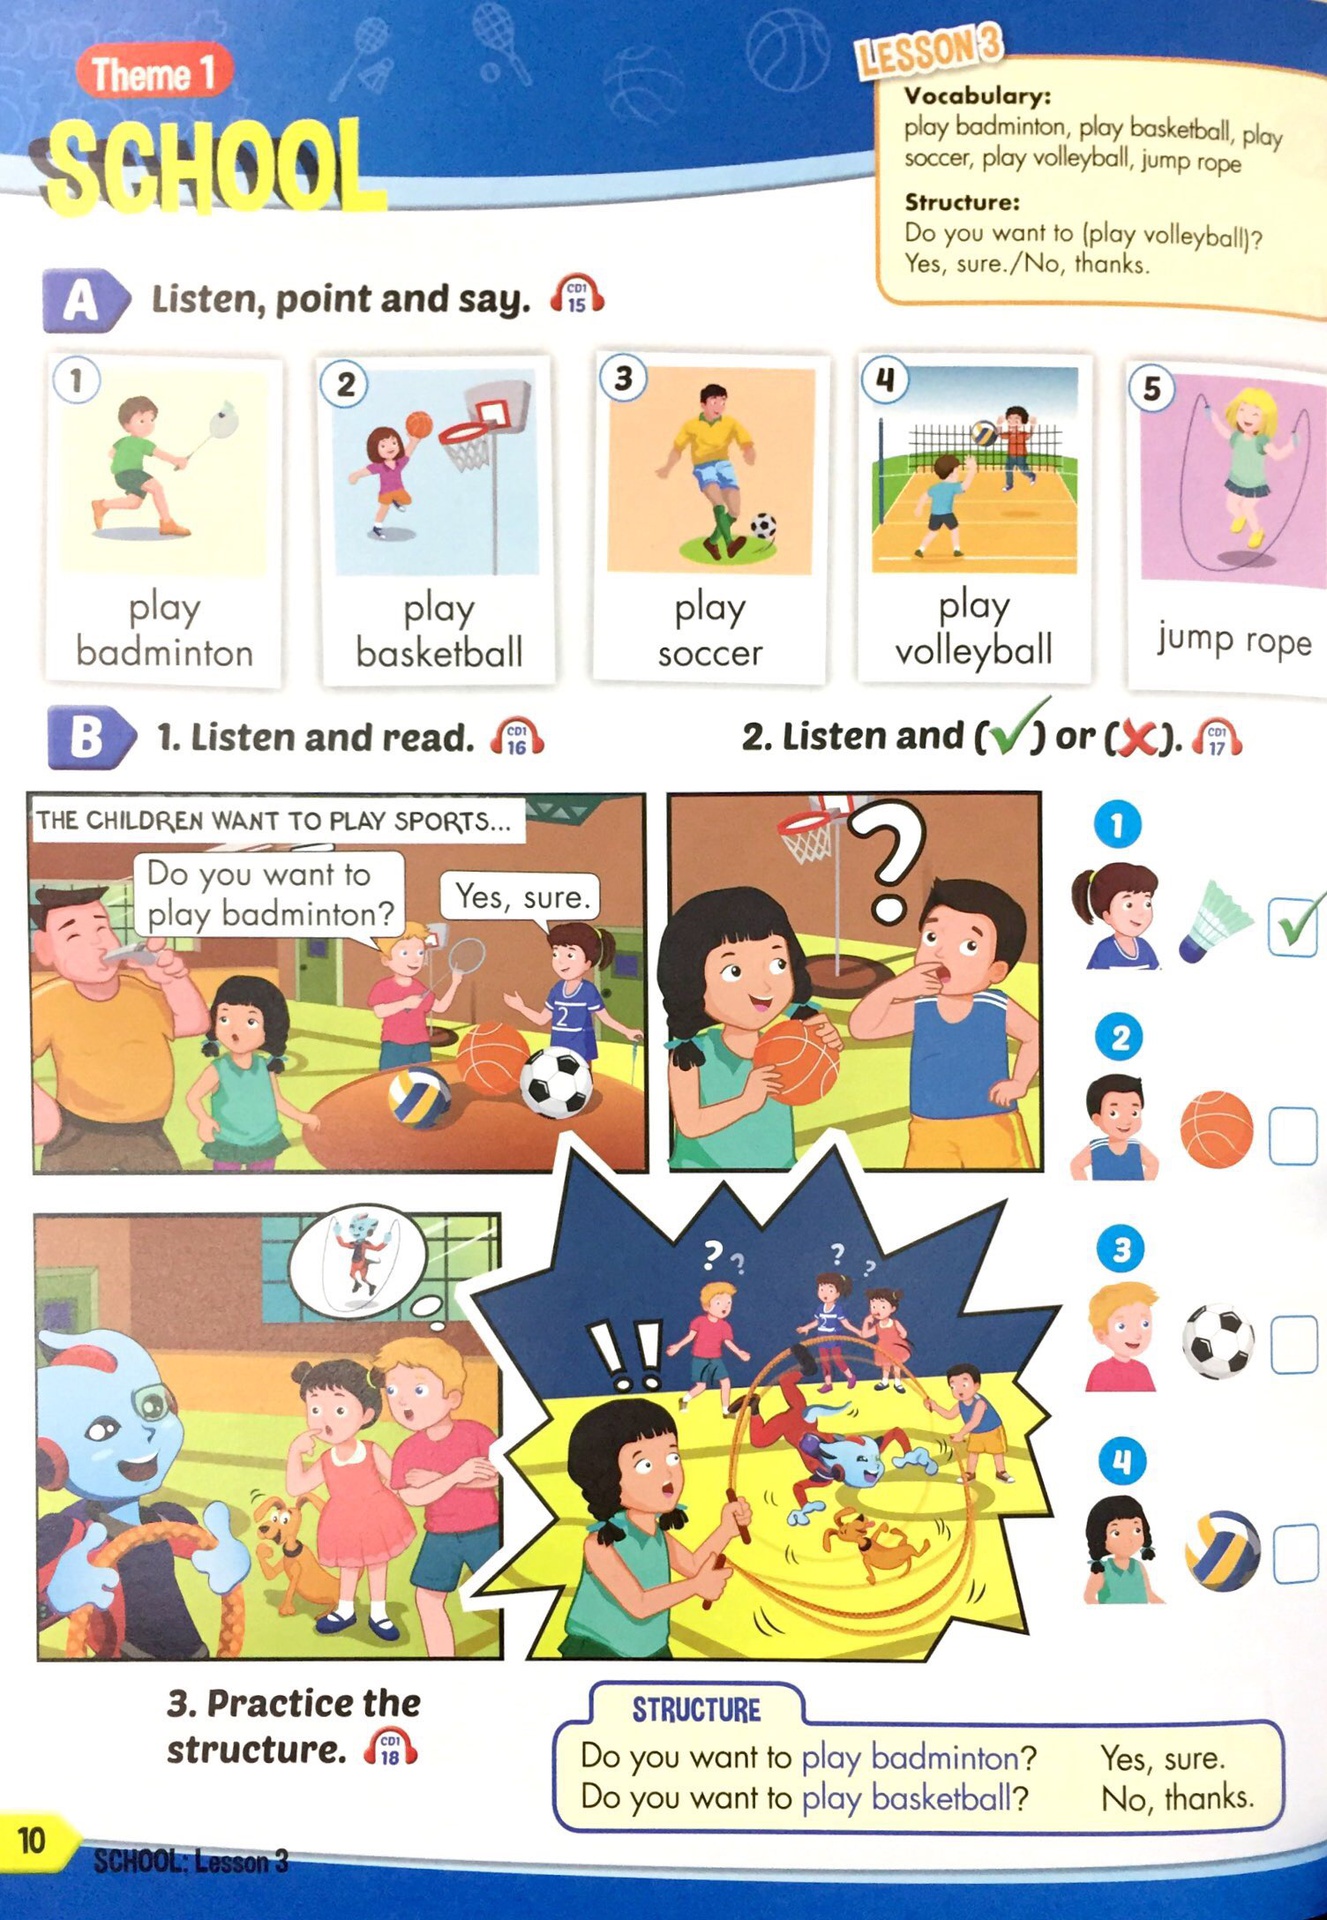 i-Learn Smart Start 4 Student Book